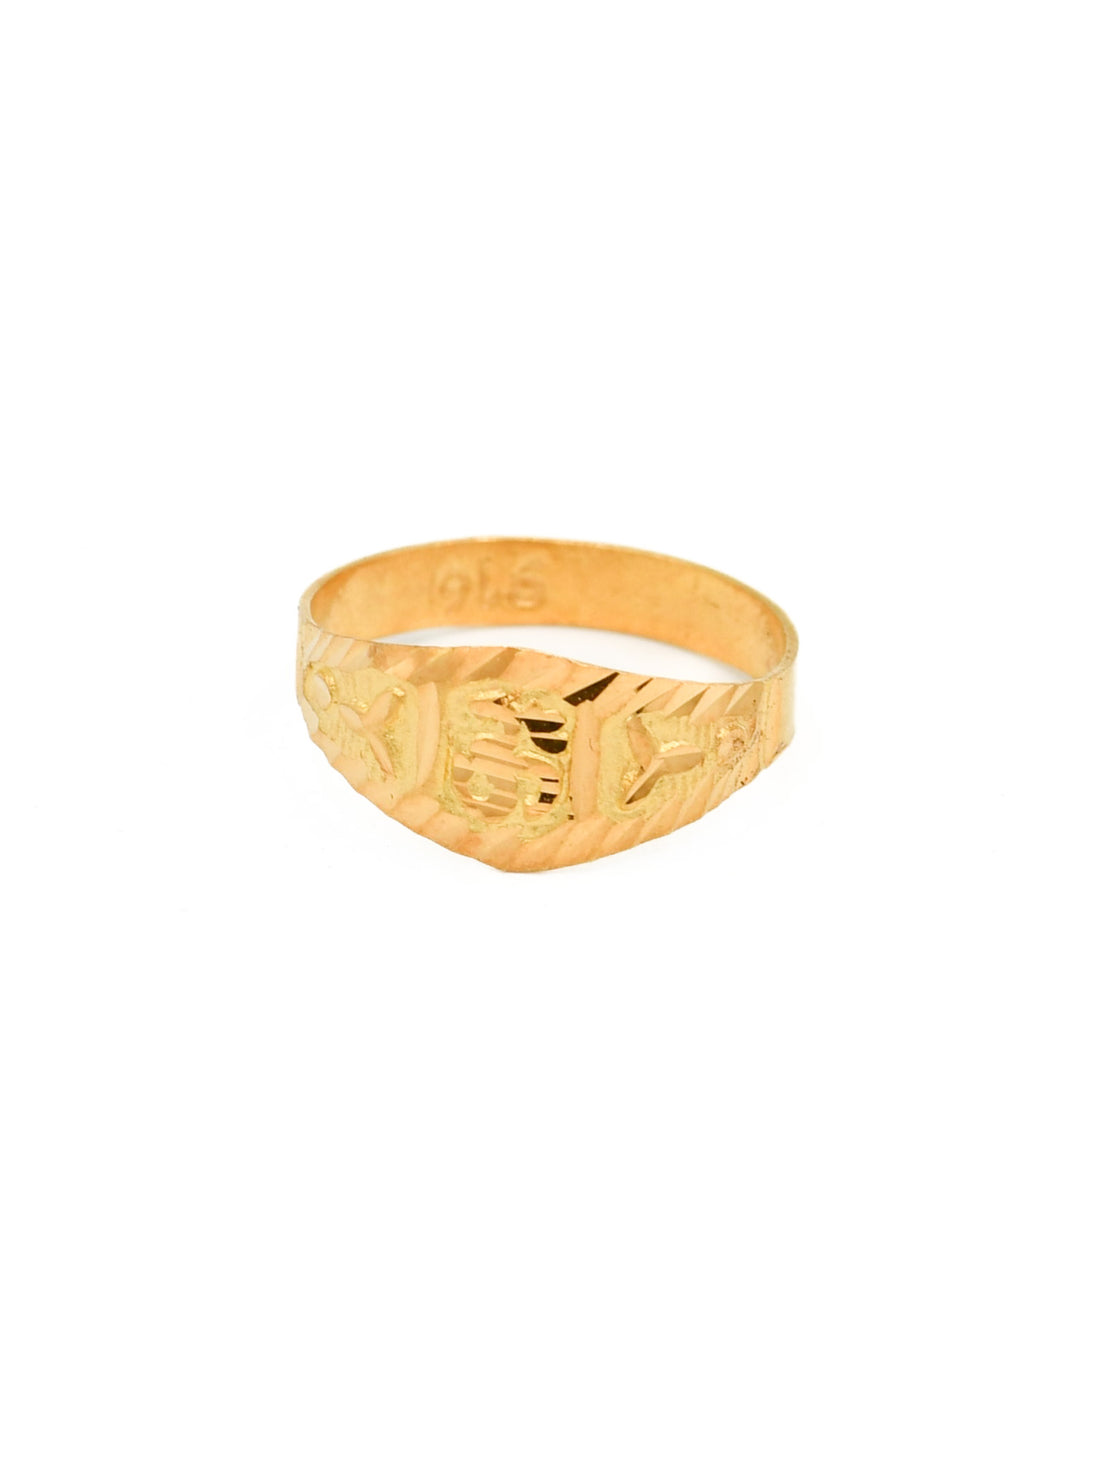 22ct Gold Baby Ring - Roop Darshan